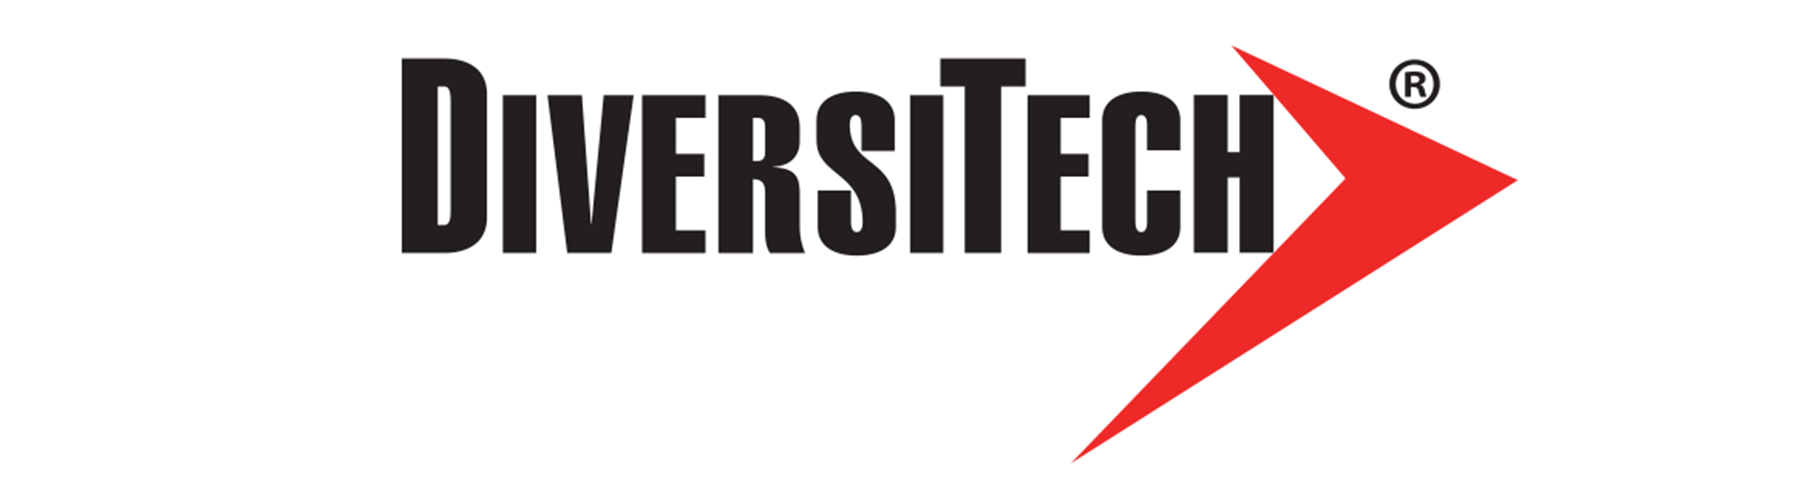 diversitech logo link to www.diversitech.com/Search?s1=msds&s=msds